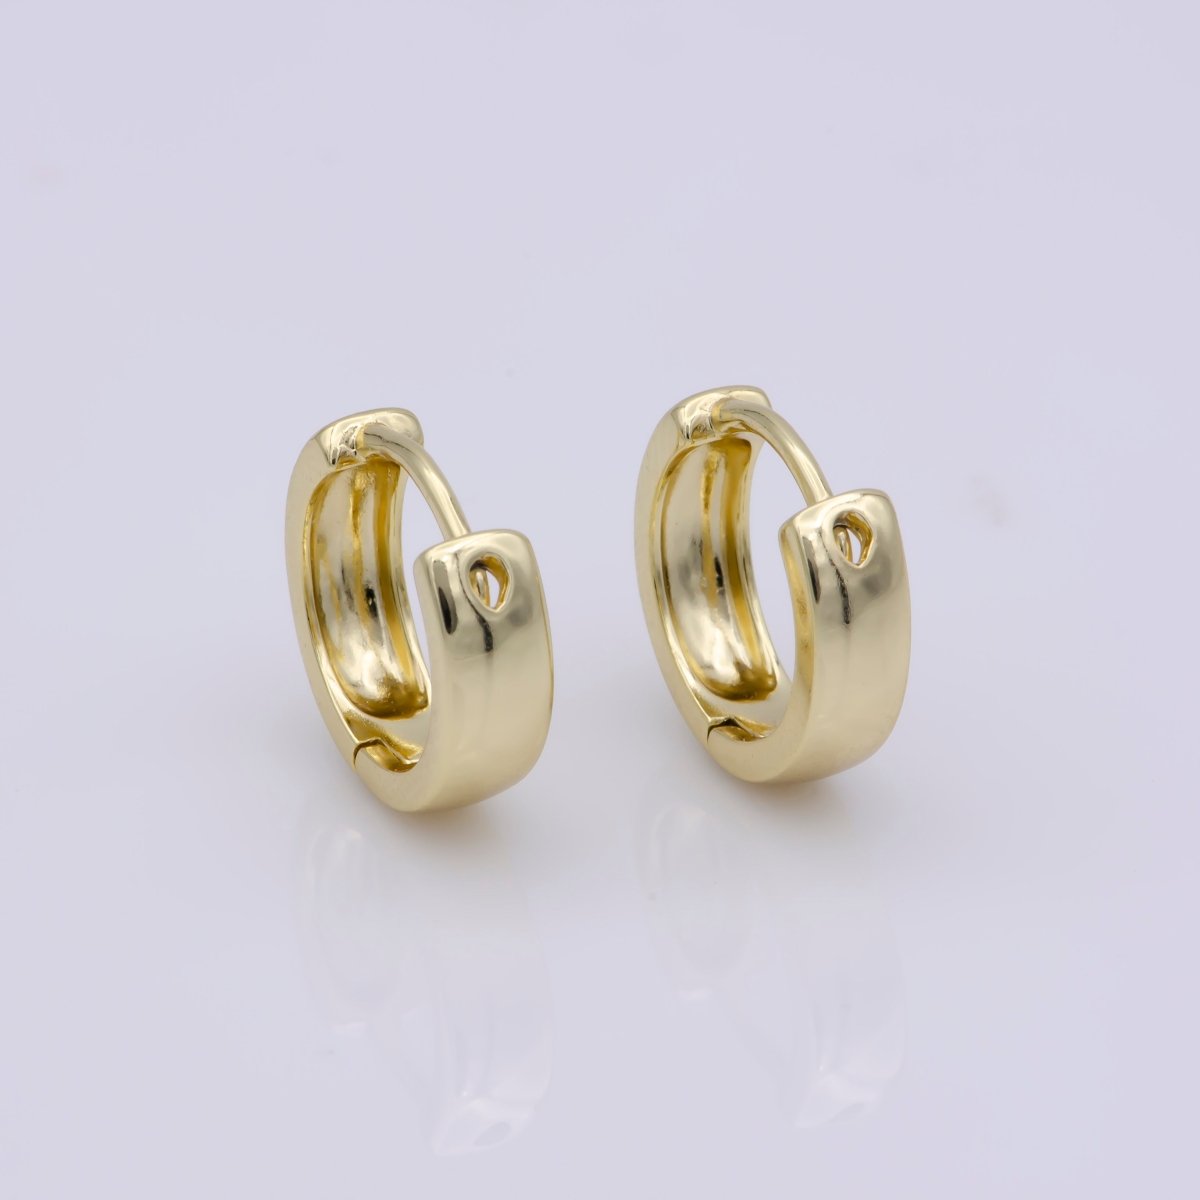 24k Vermeil Gold Earrings, Hoop Earrings, Small Hoop, Huggies Earring, Gift for Her, Earrings for Women, Everyday Wear Earrings K-755 - DLUXCA